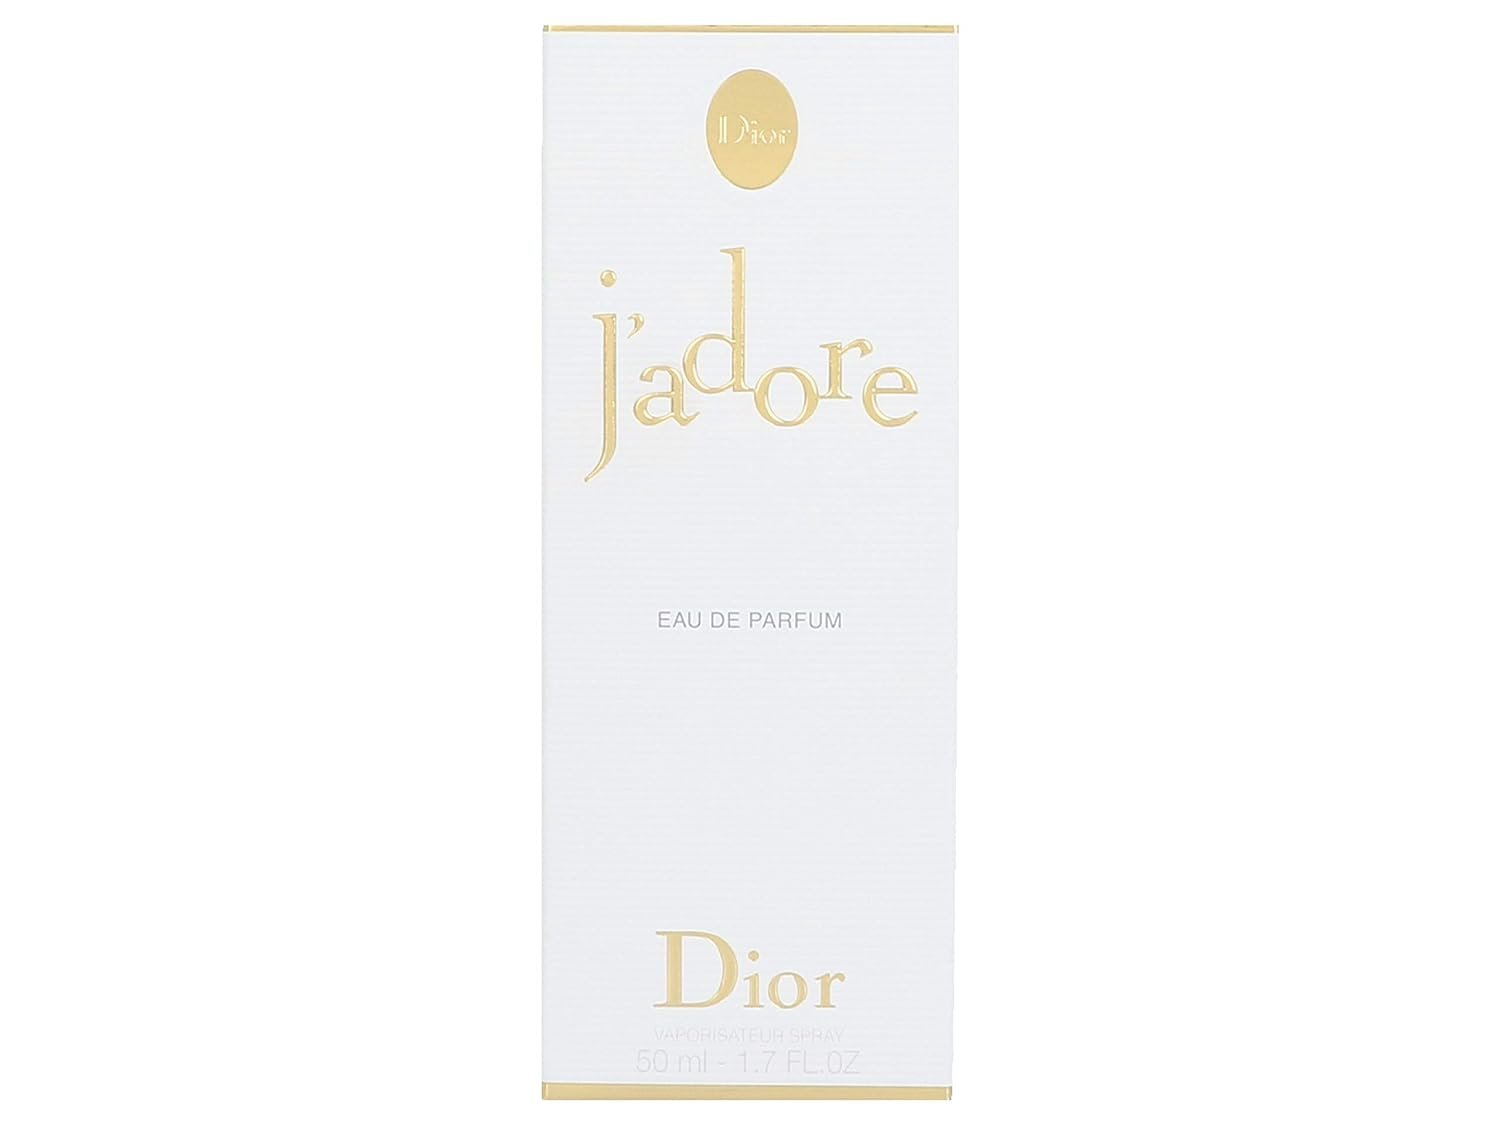 Christian Dior Jadore Infinissime Women 3.4 oz EDP Spray